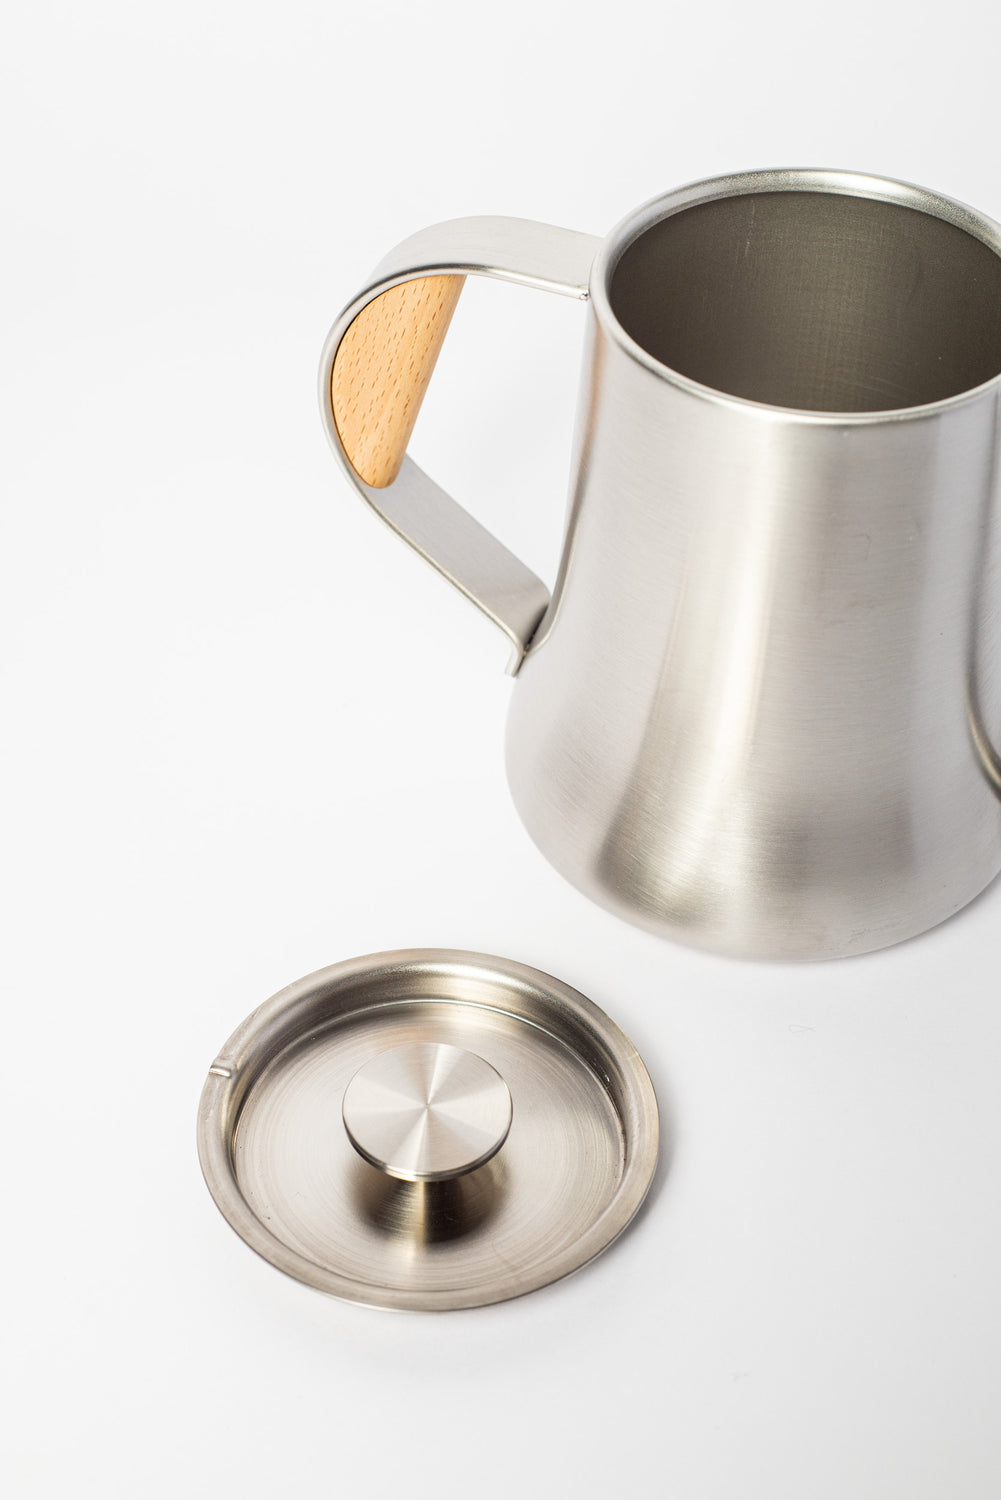 BONMAC Coffee Drip Pot Pro, Stainless Steel